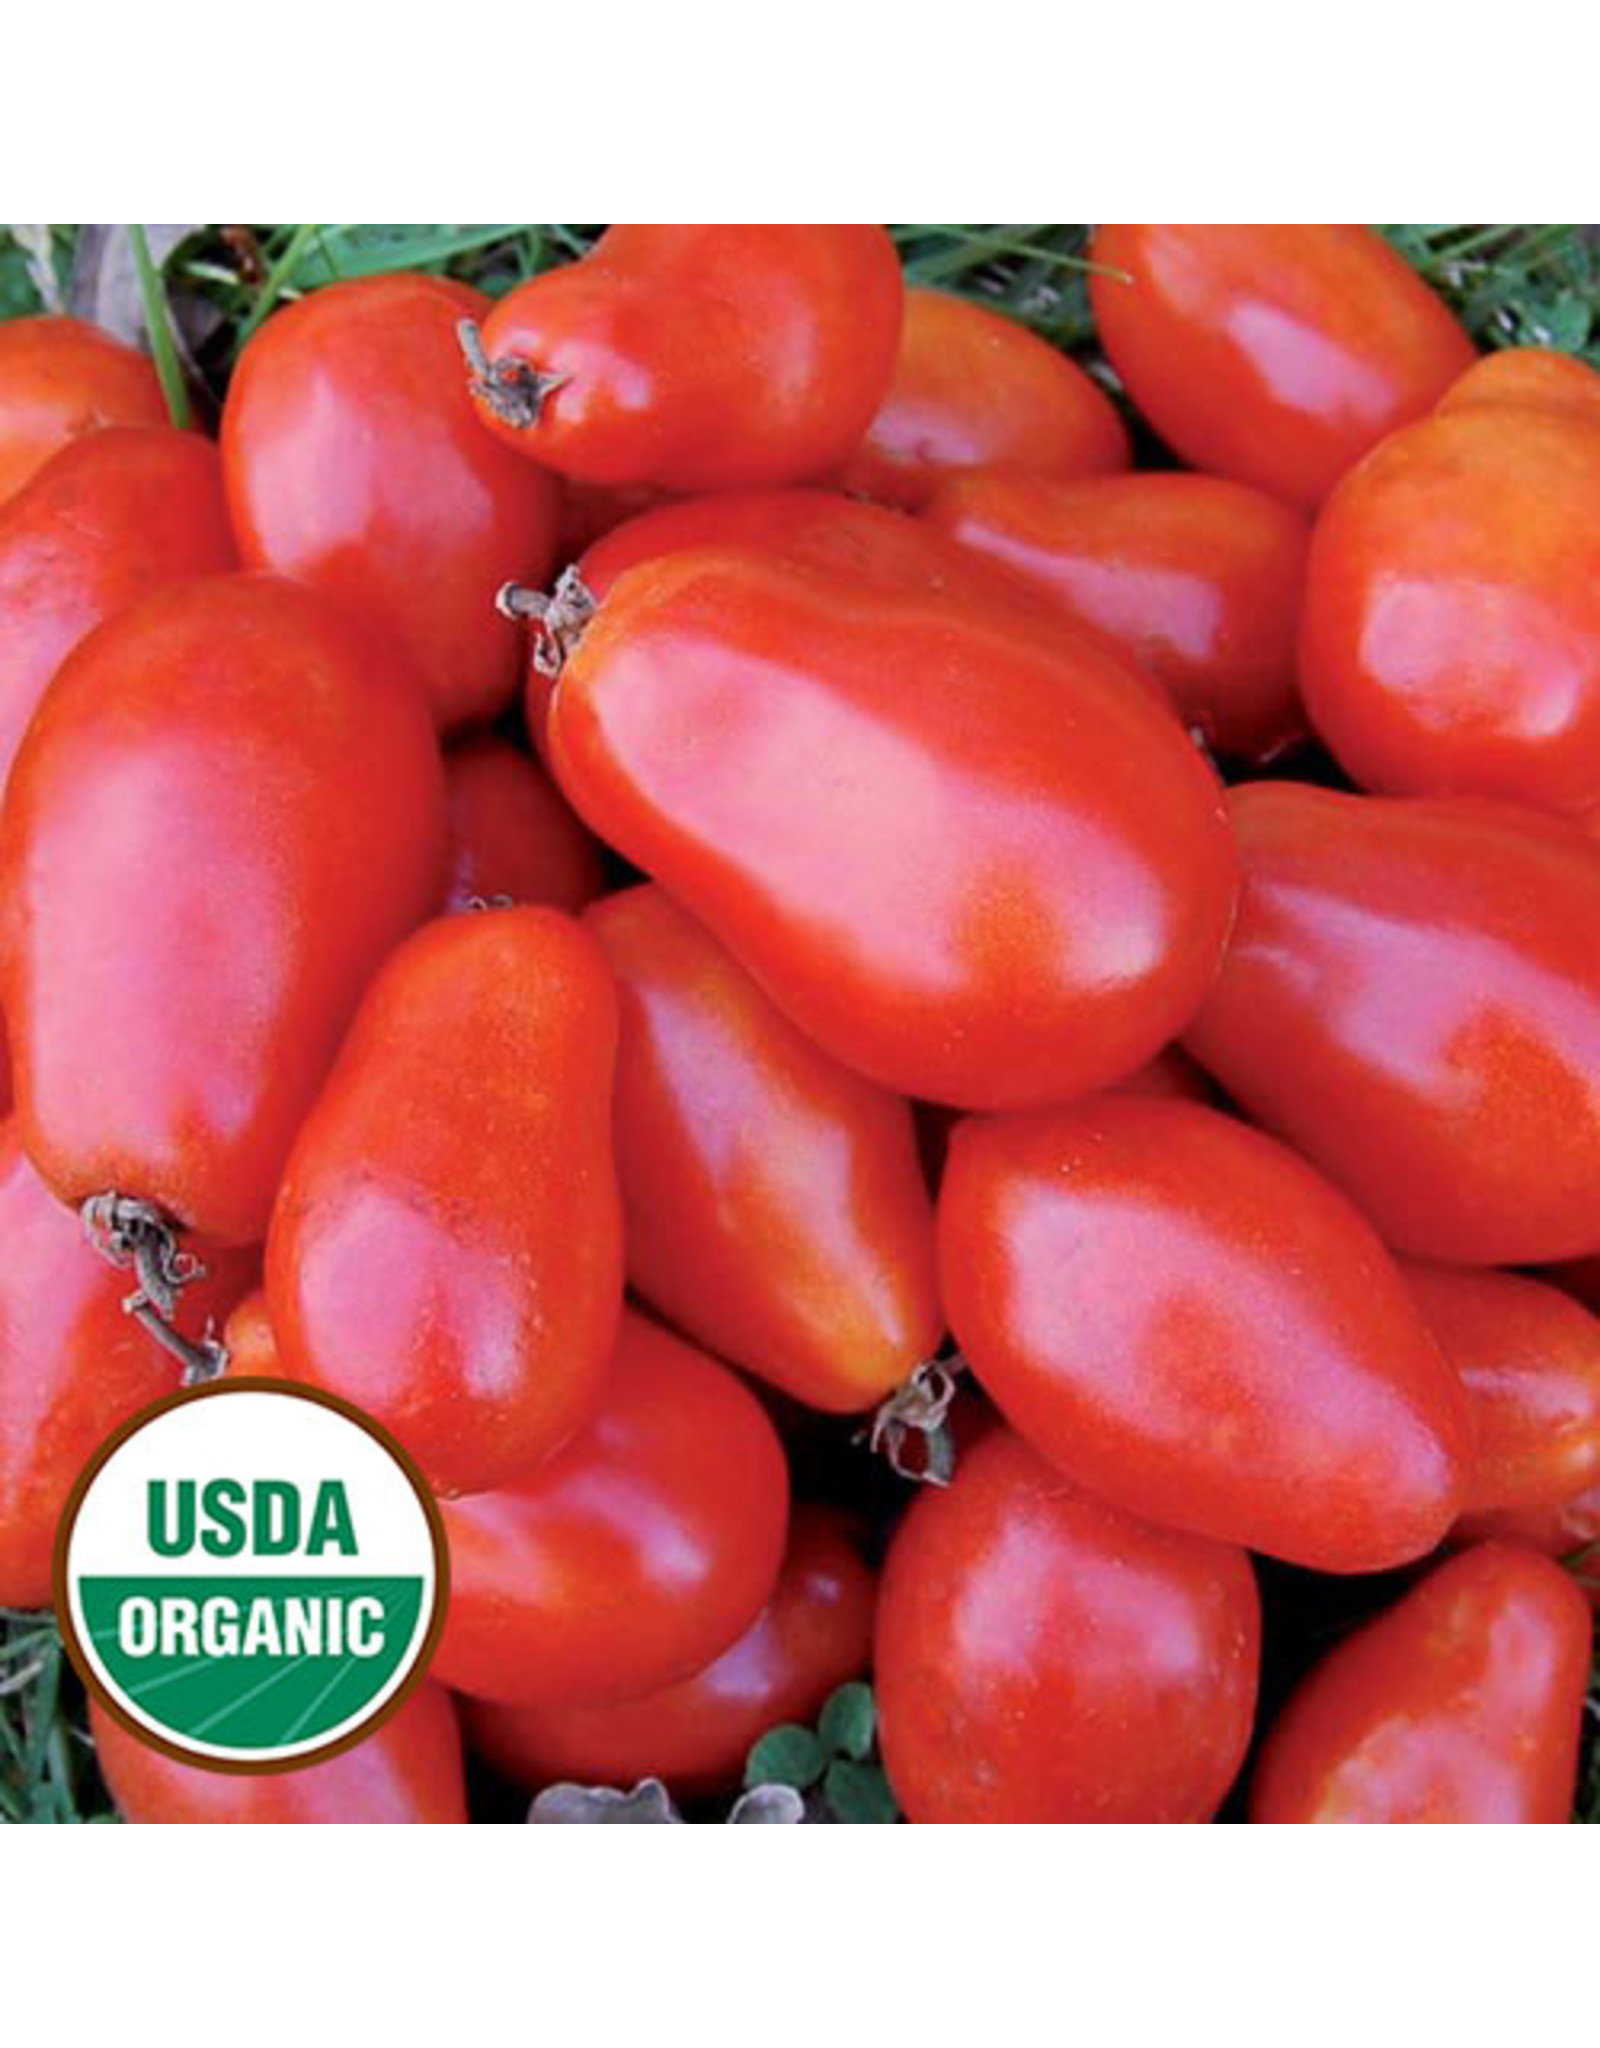 Seed Savers Tomato - Martino's Roma (organic)